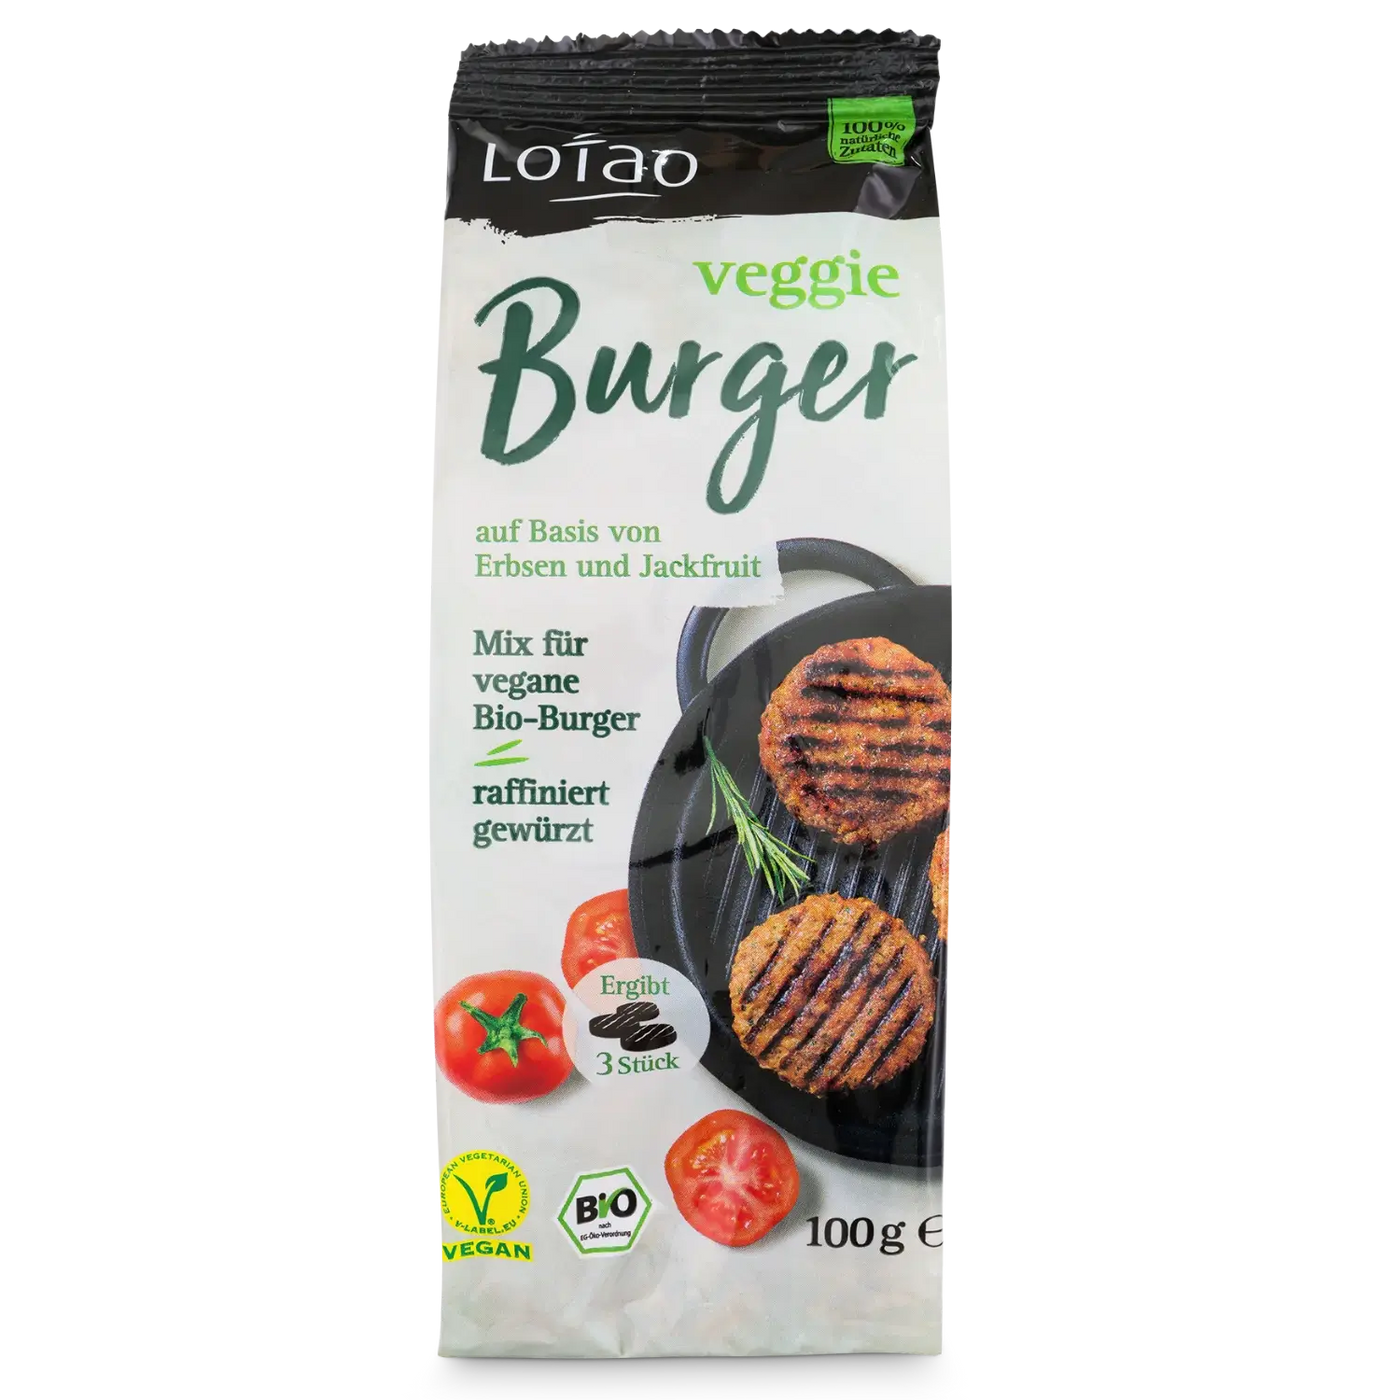 Lotao Veggie Burger Mix für vegane Bio-Burger, Packshot